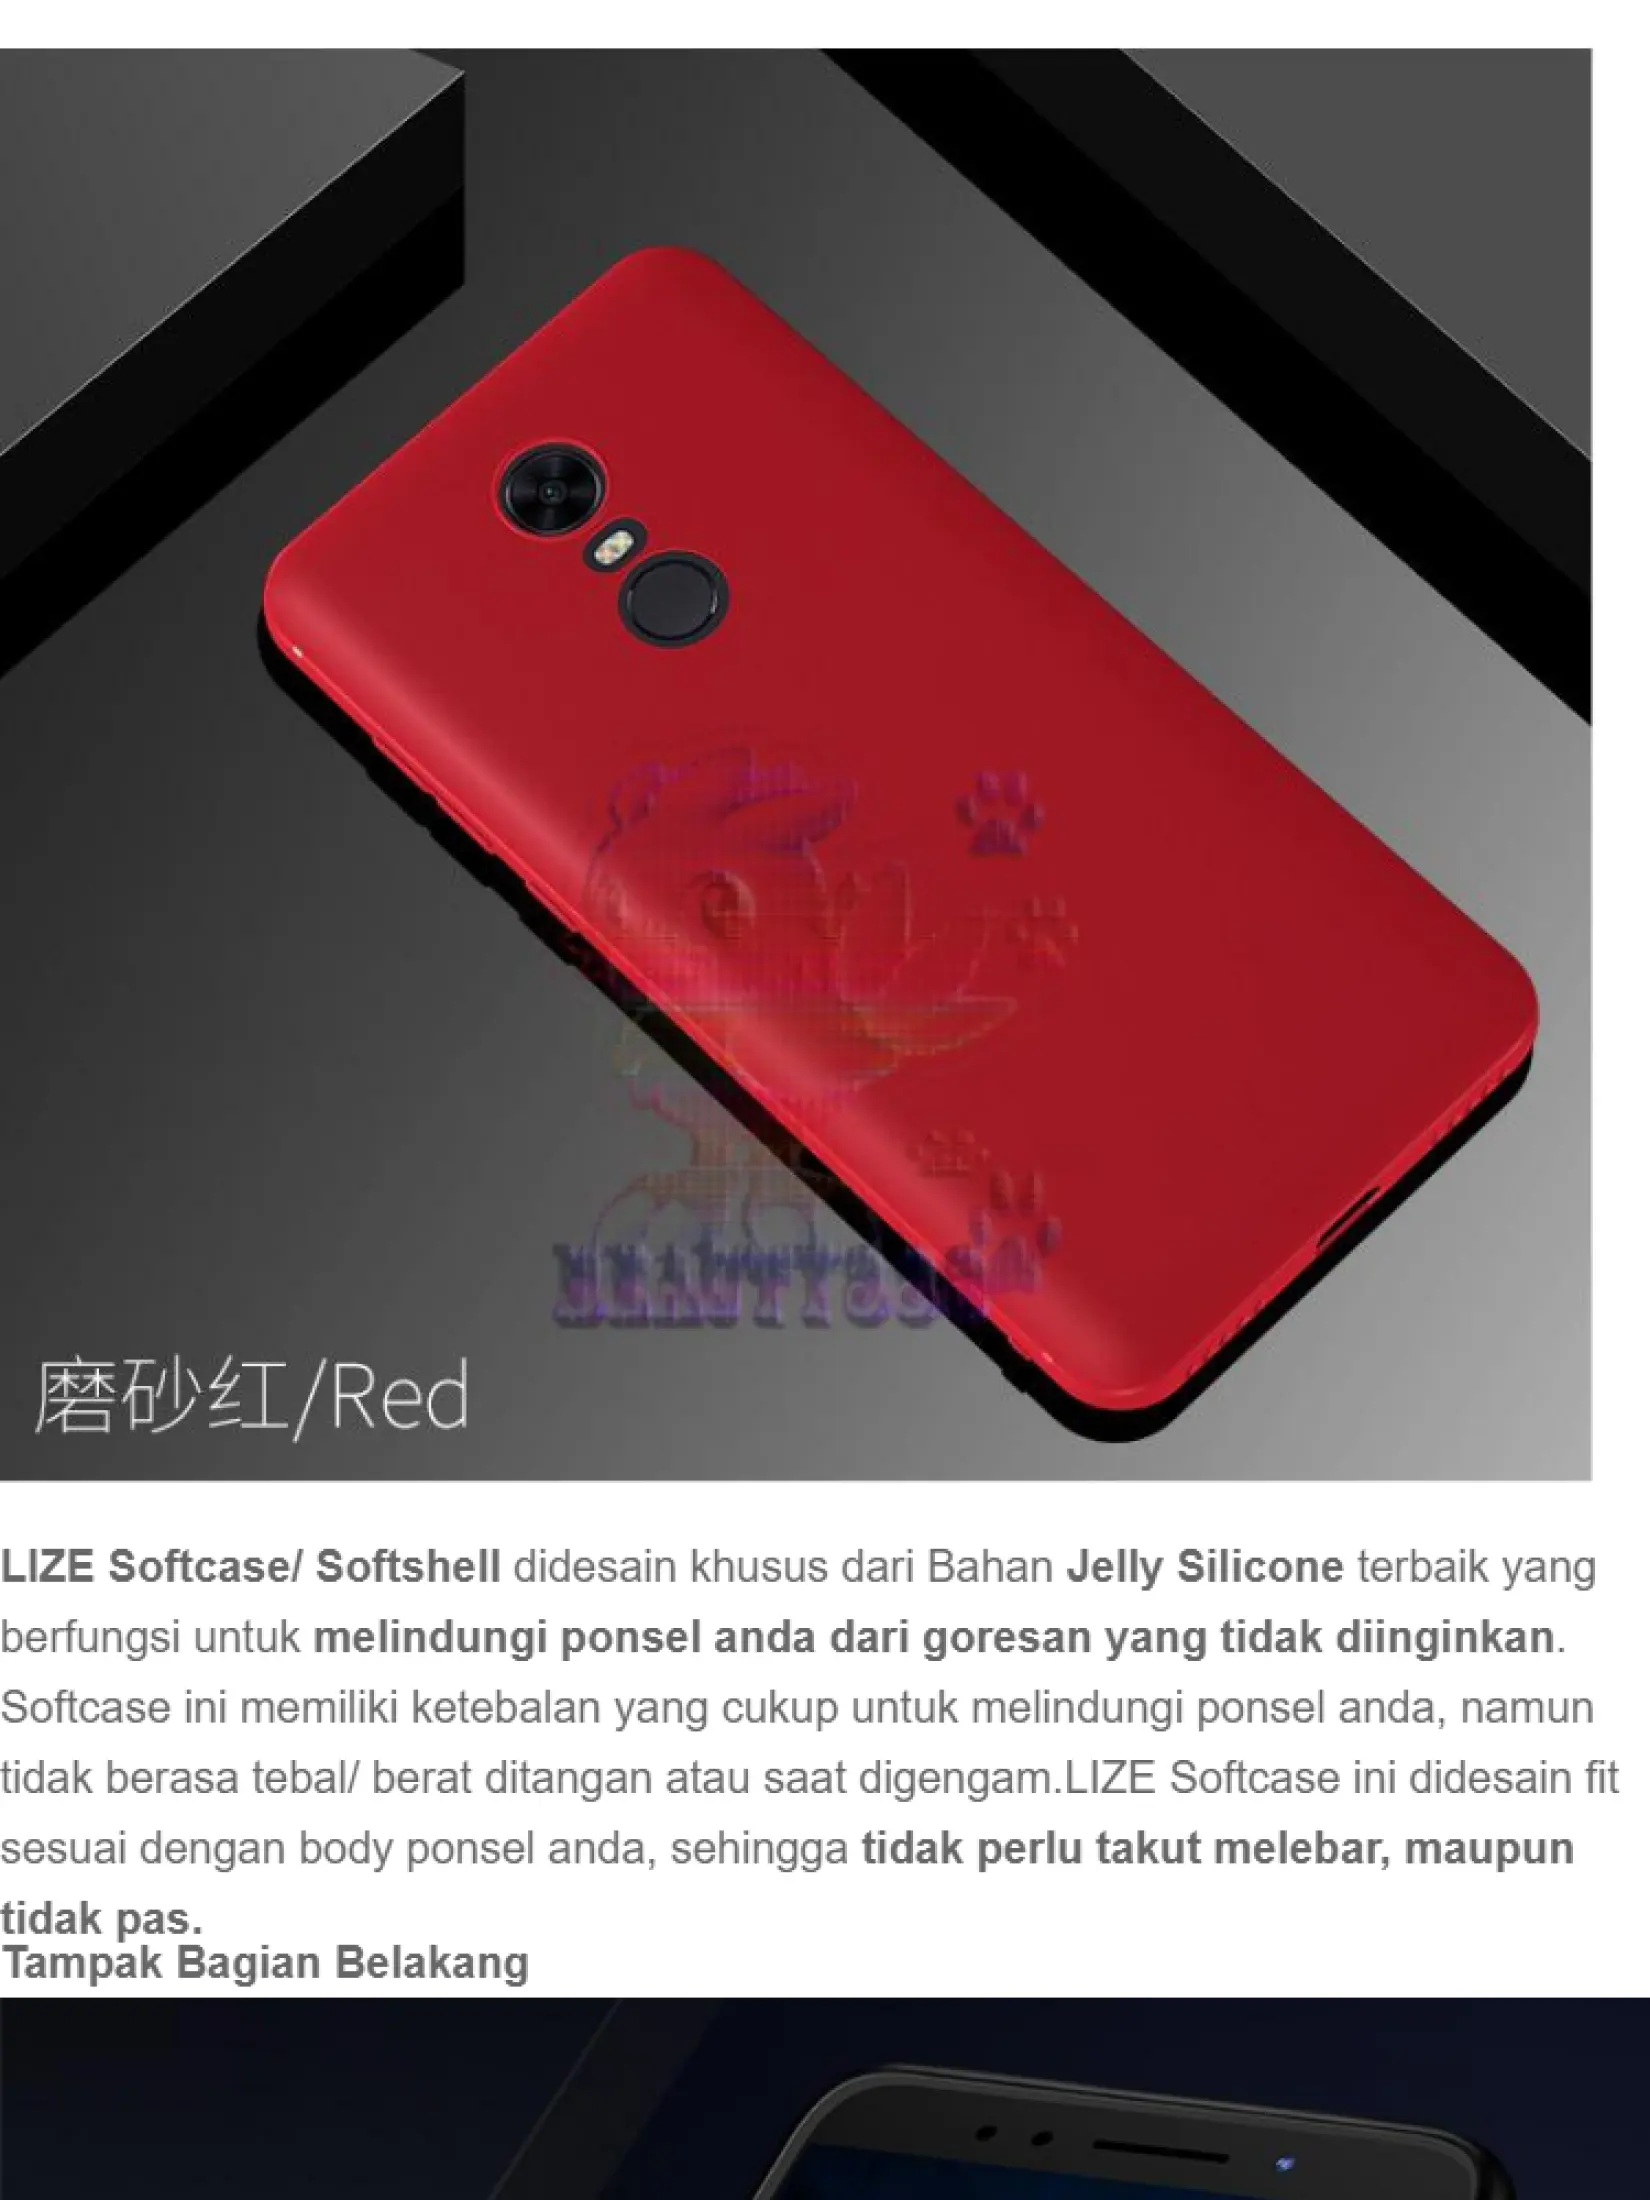 Spesifikasi Xiaomi Redmi Note 4x